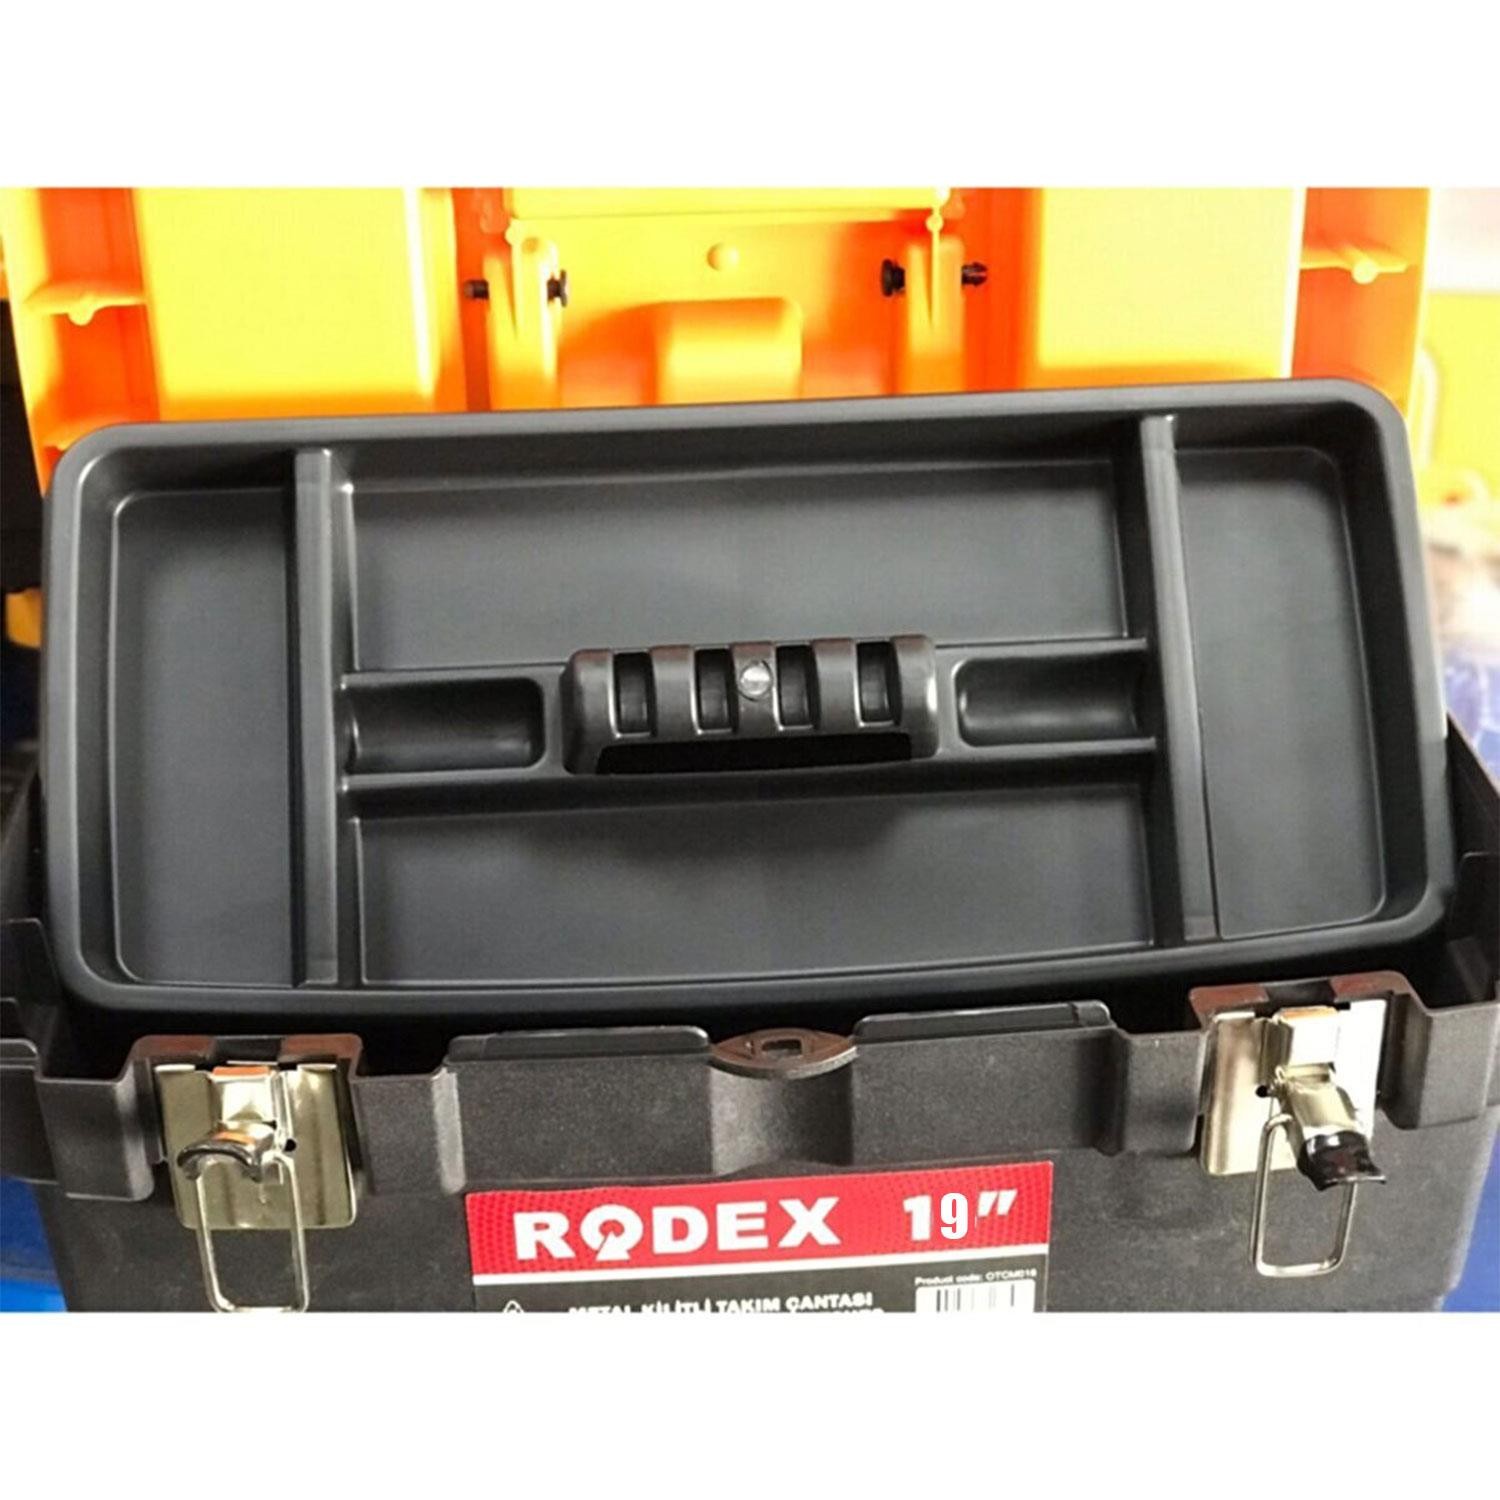 Rodex Takım Çantası Alet Çantası Metal Açma Kapatmalı OTCM019 19 